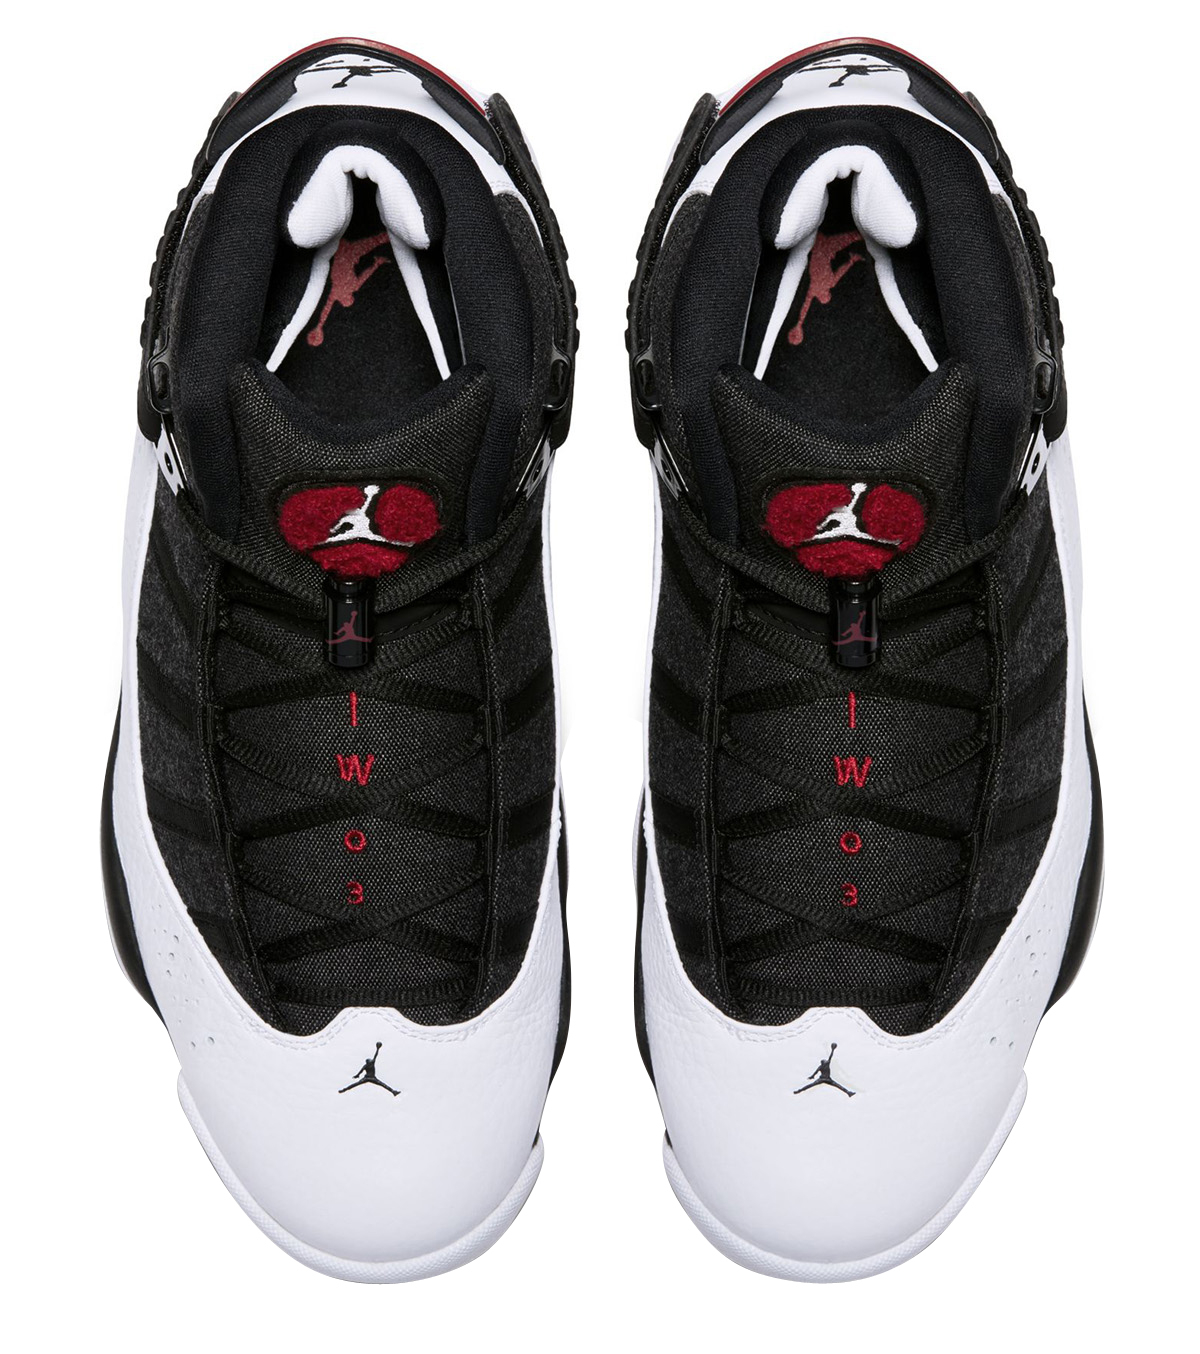 Jordan 6 Rings - Mens Size US 13 - White/Black/Gym Red Shoes 322992-012